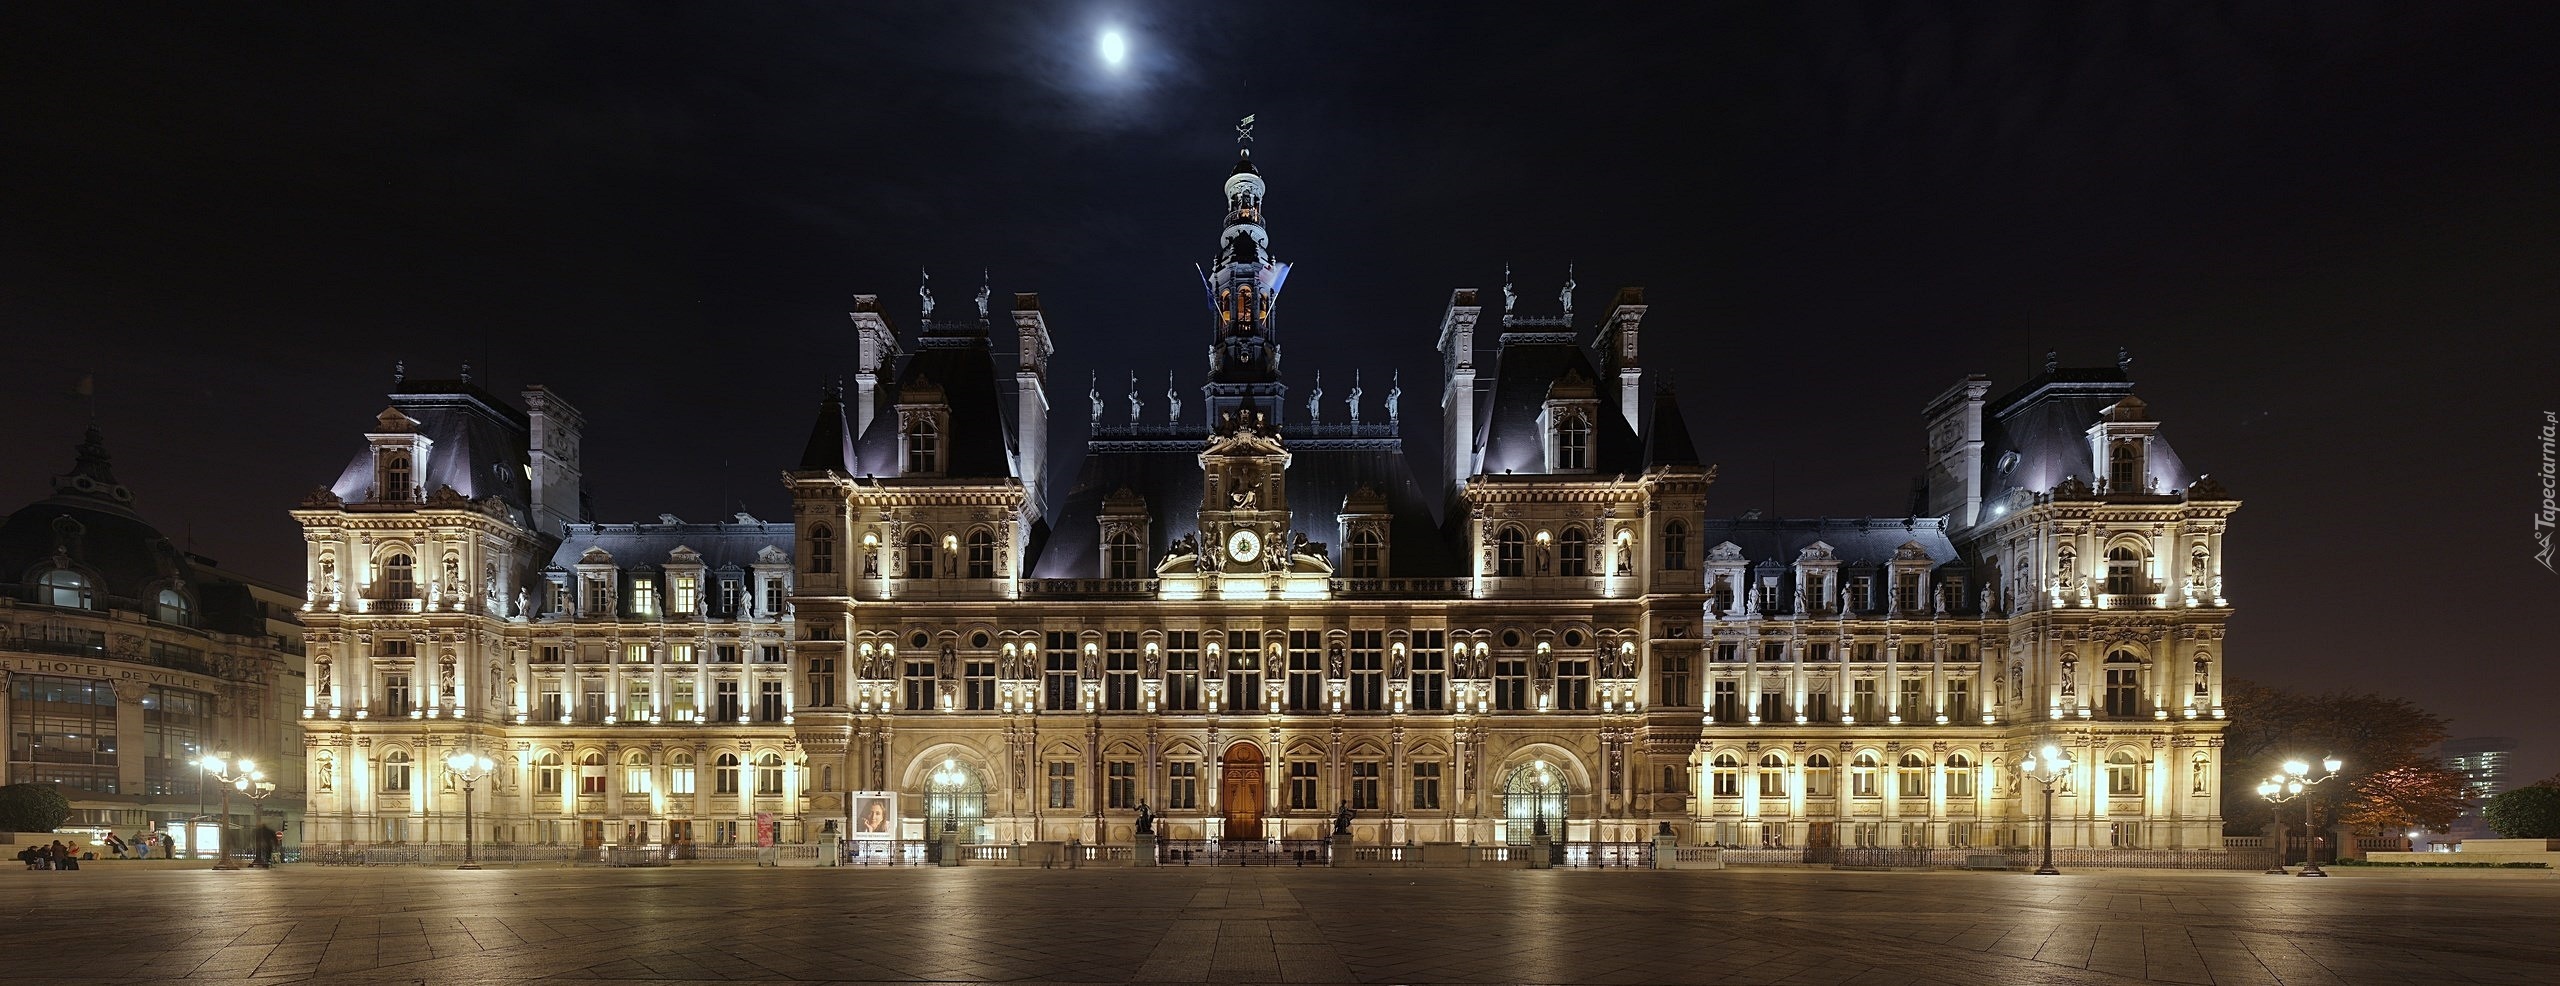 Hotel de Ville, Paryż, Francja, Panorama, Noc, Światła